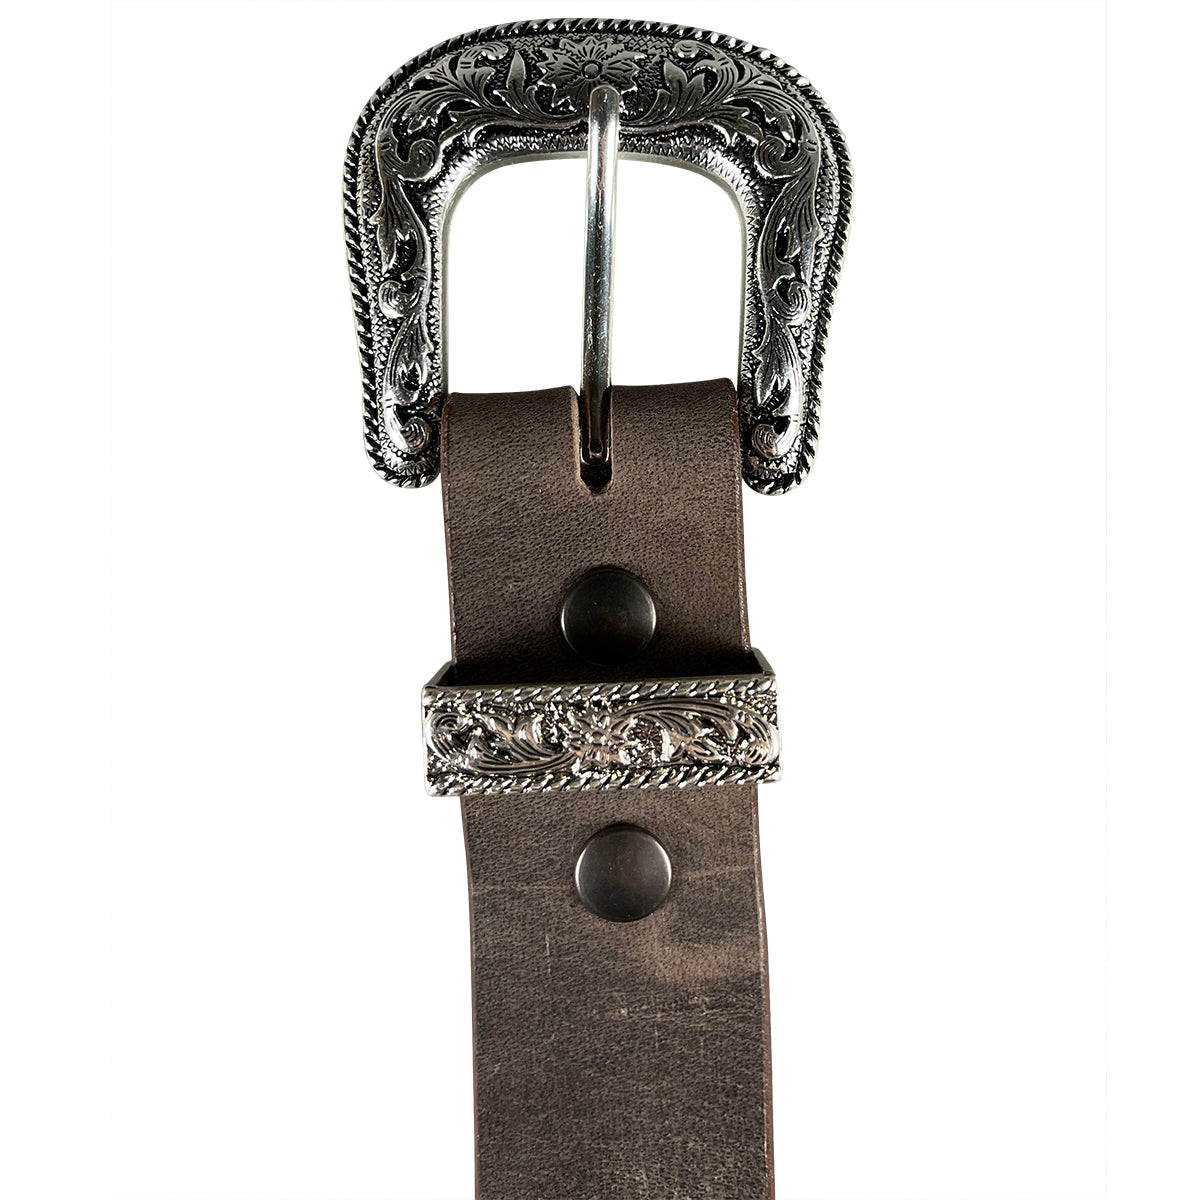 1.25(32mm) Men's Black Full Grain Leather Belt Handmade in Canada by